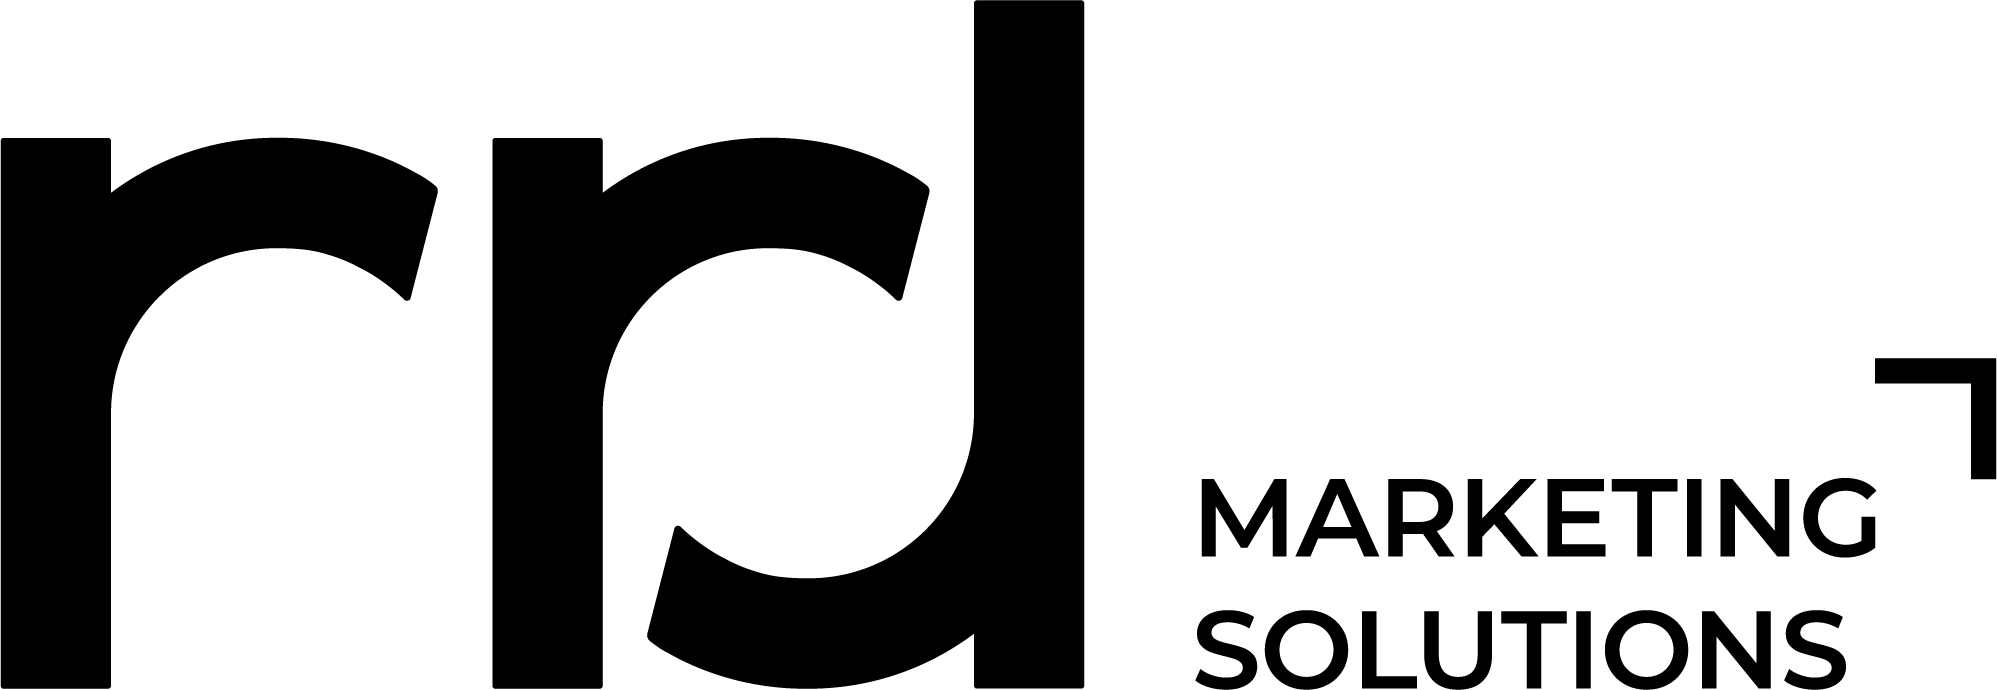 RRD Logo